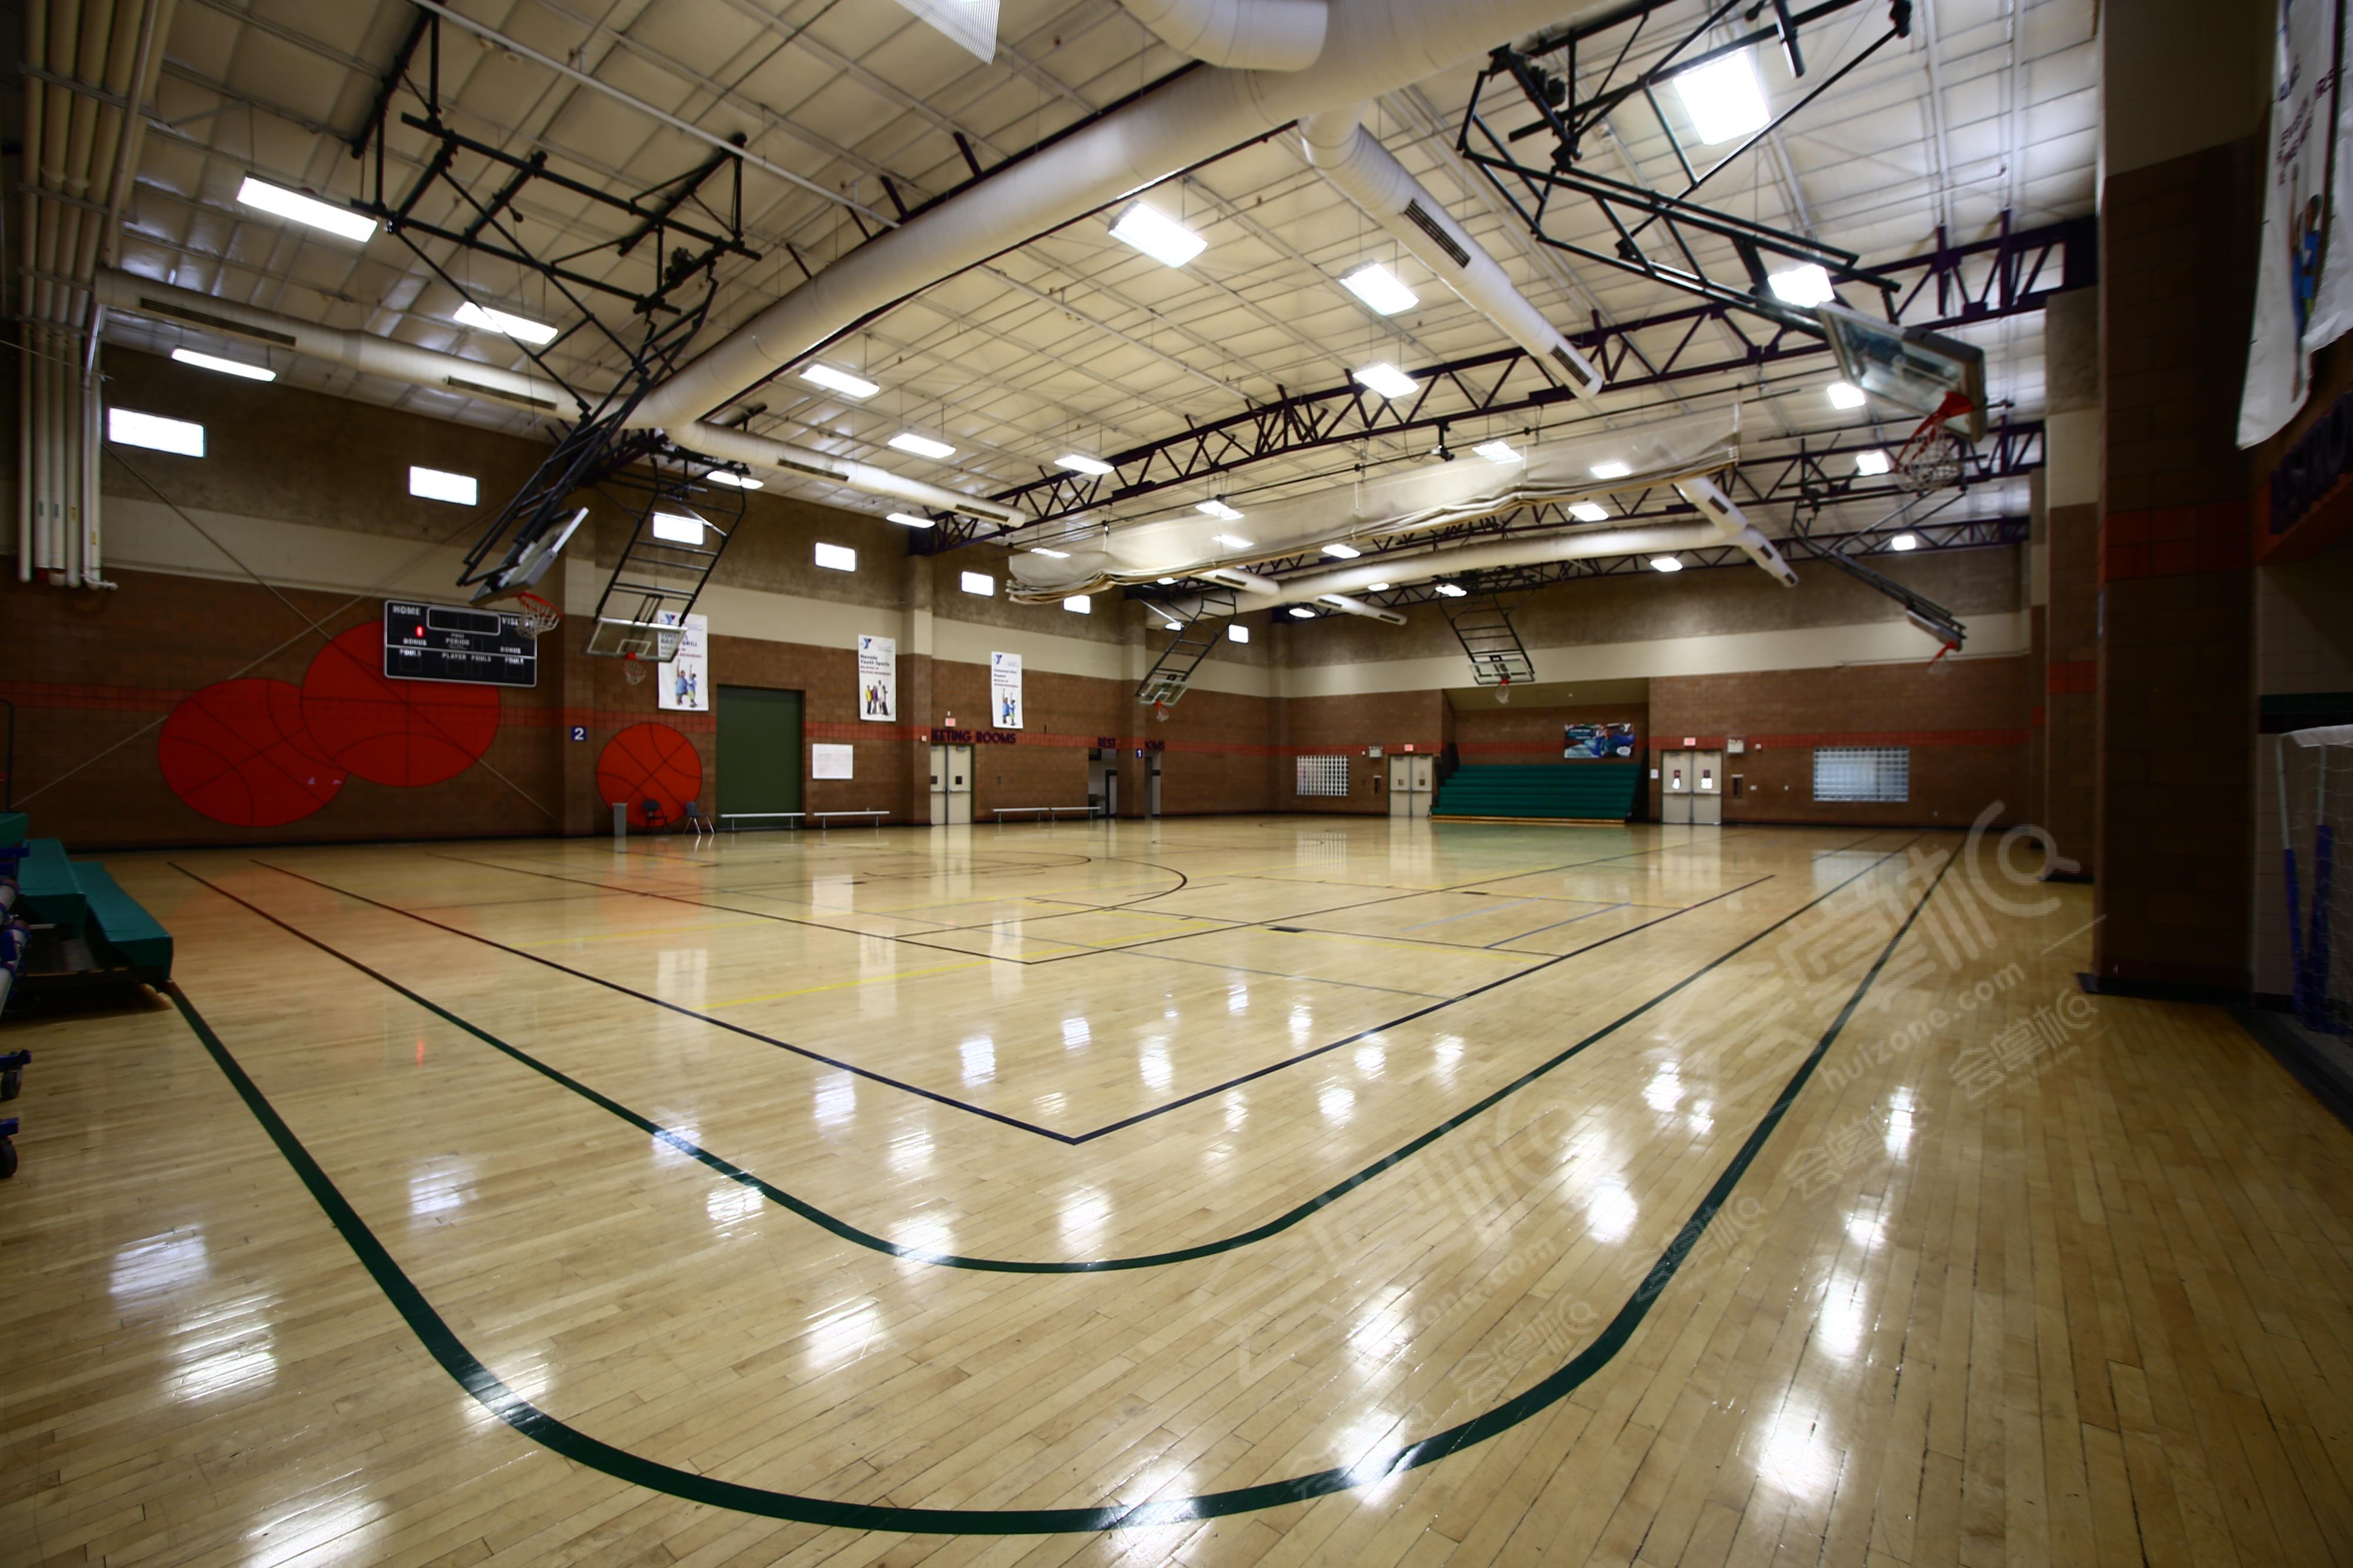 Amazing Gymnasium For Large Get-Togethers